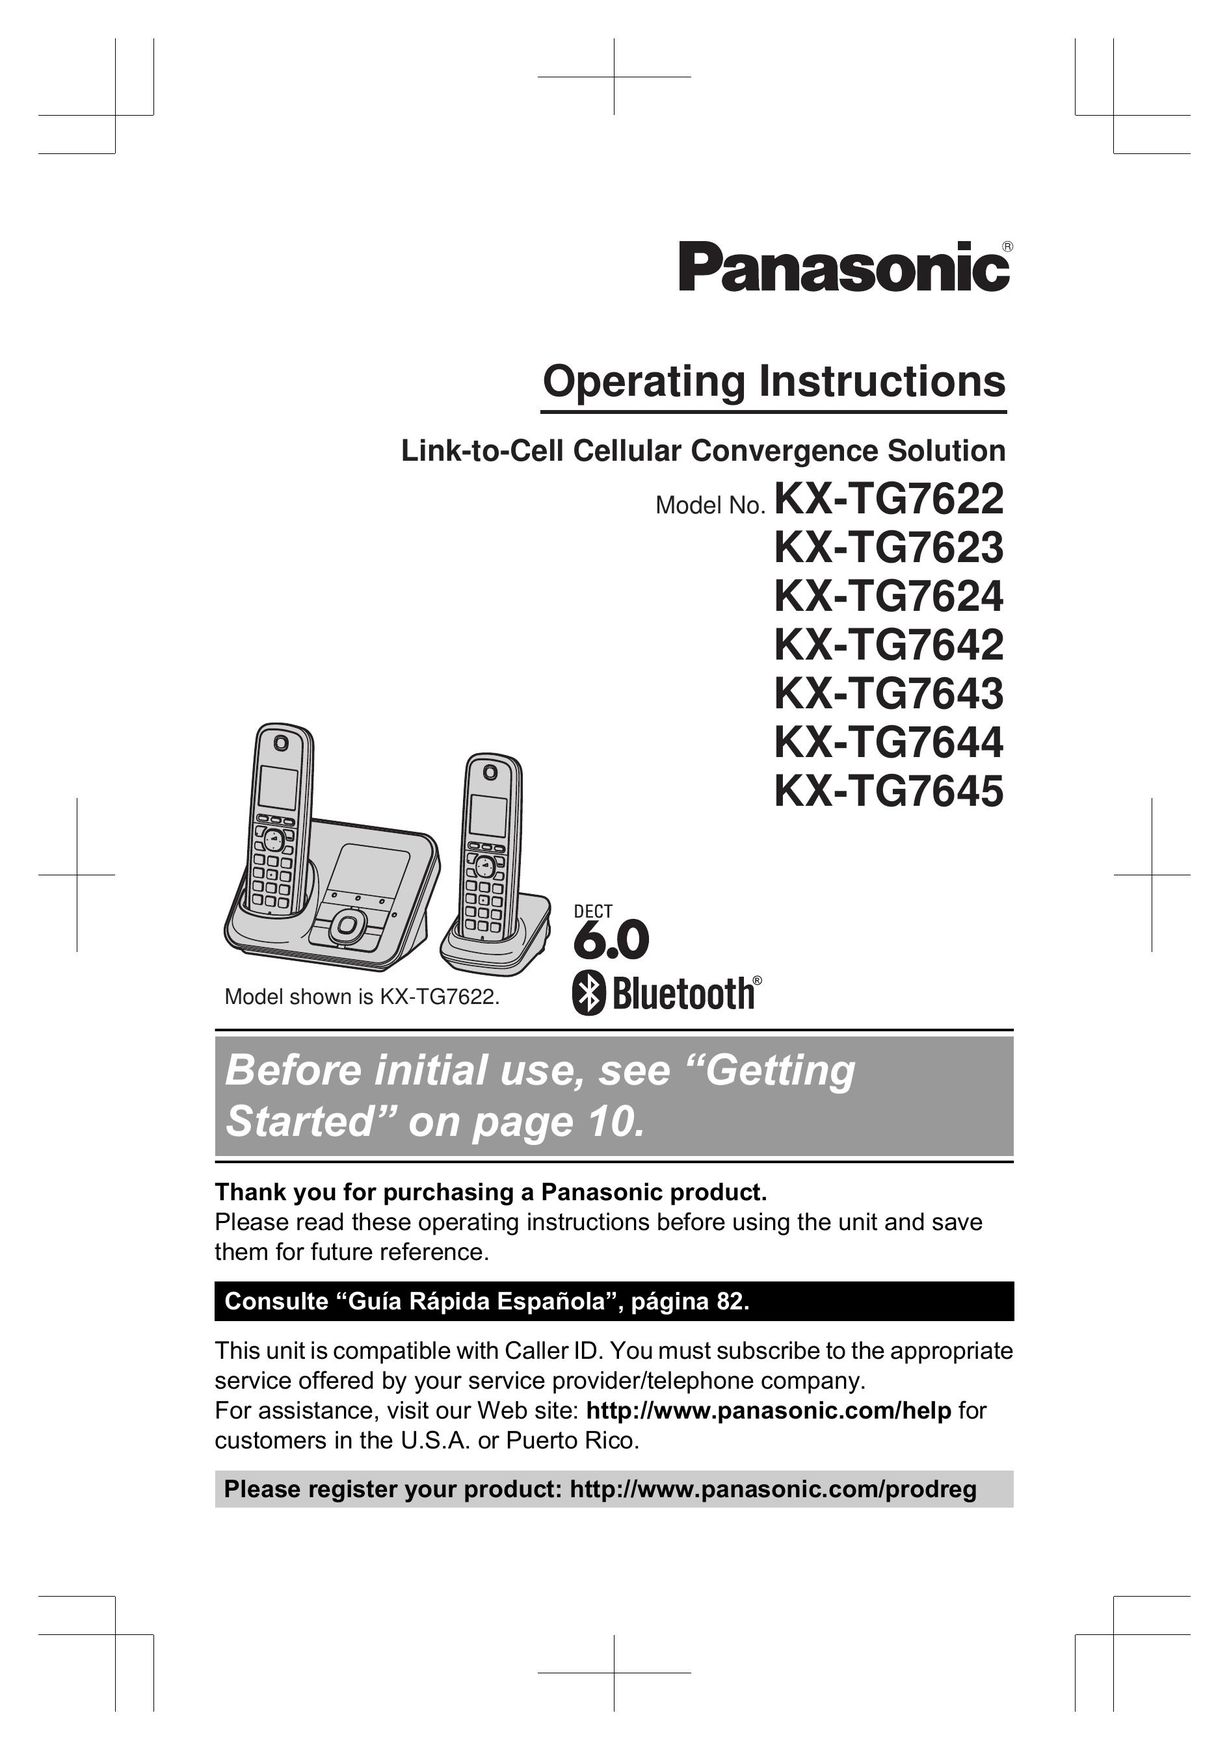 Panasonic KX-TG7645M Bluetooth Headset User Manual